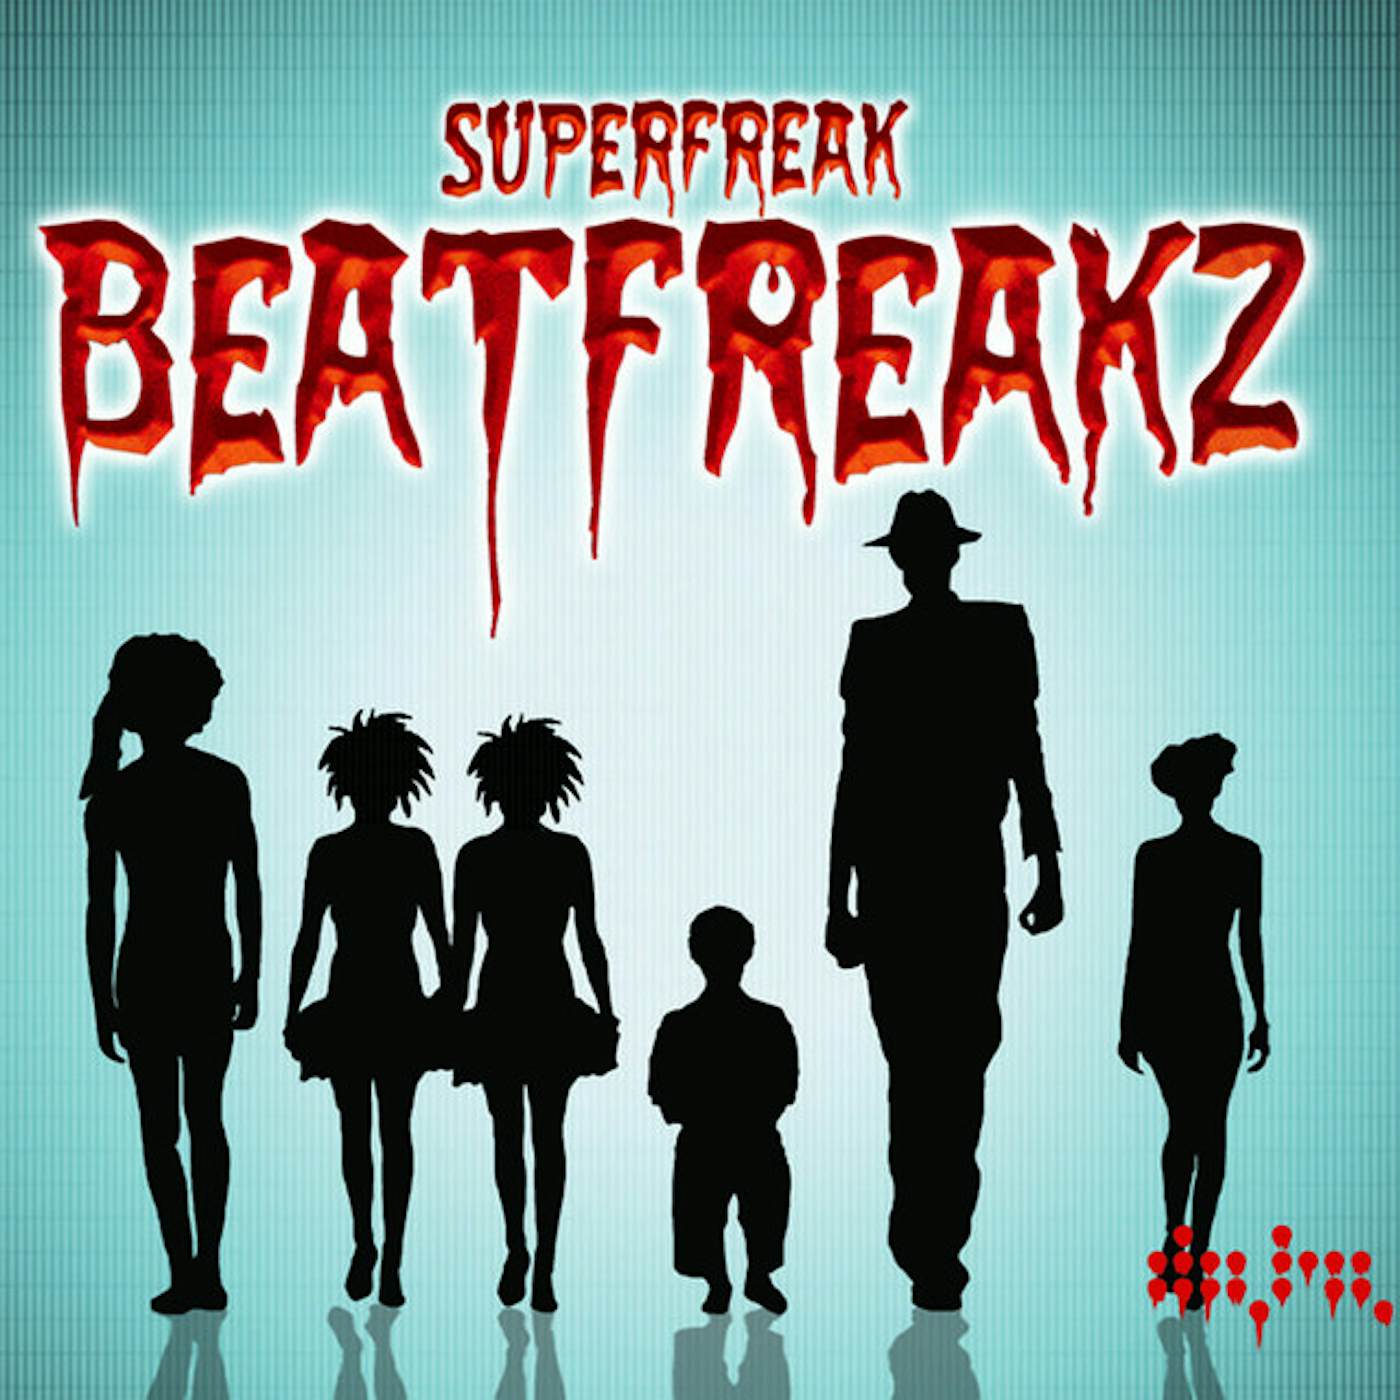 BeatFreakz SuperFreak Vinyl Record